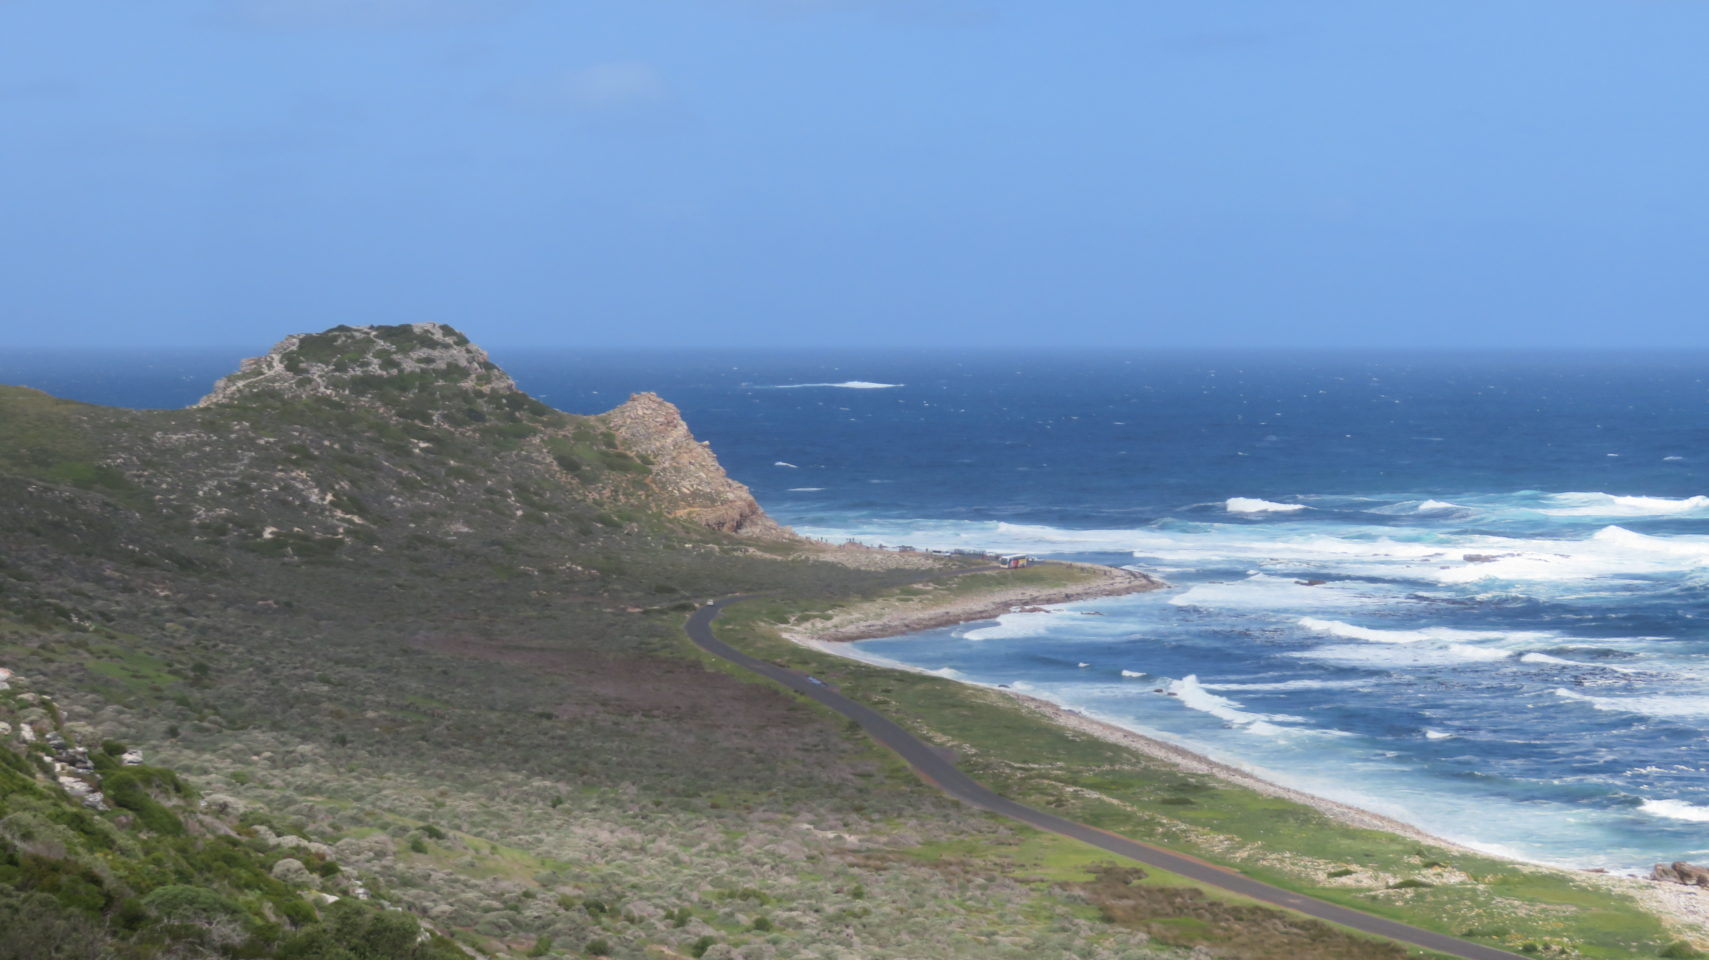 The renowned Cape of Good Hope ~ Cape Peninsula